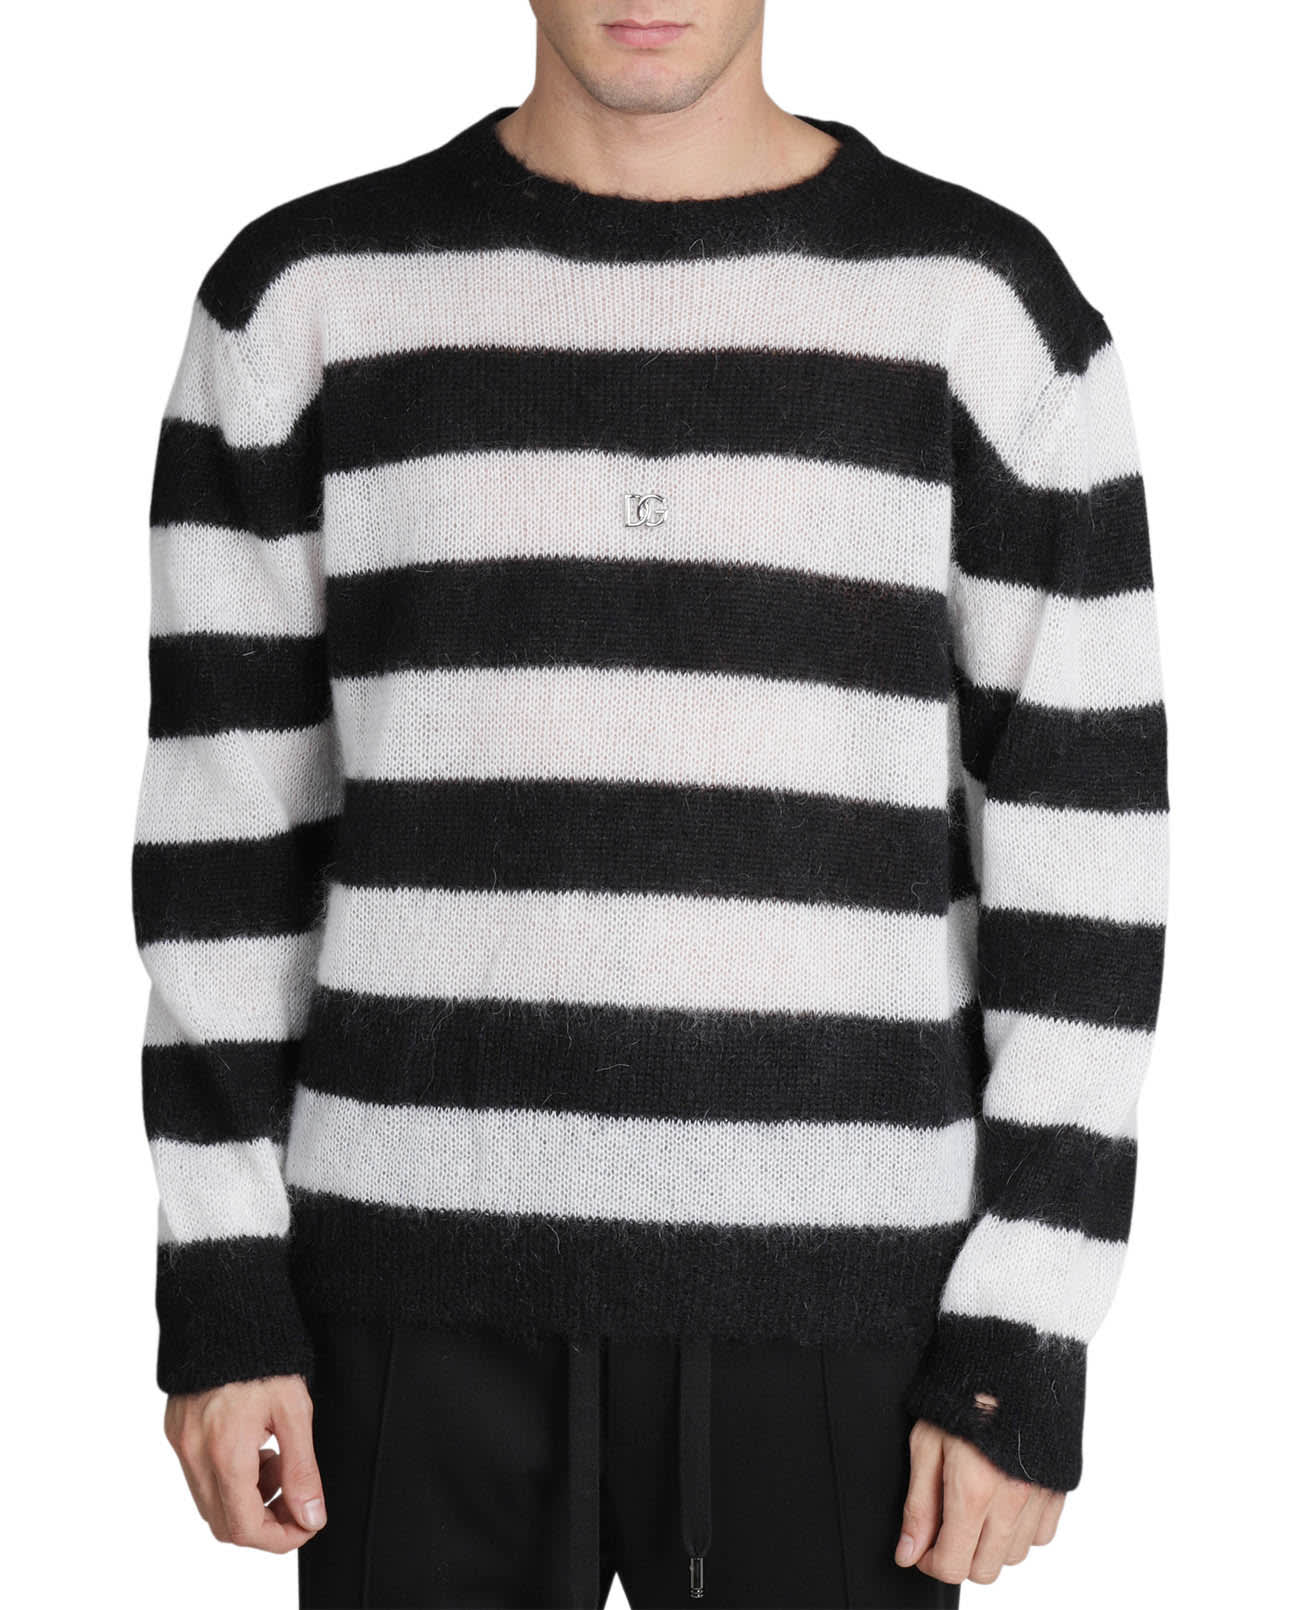 Dolce & Gabbana Black And White Crewneck Sweater.